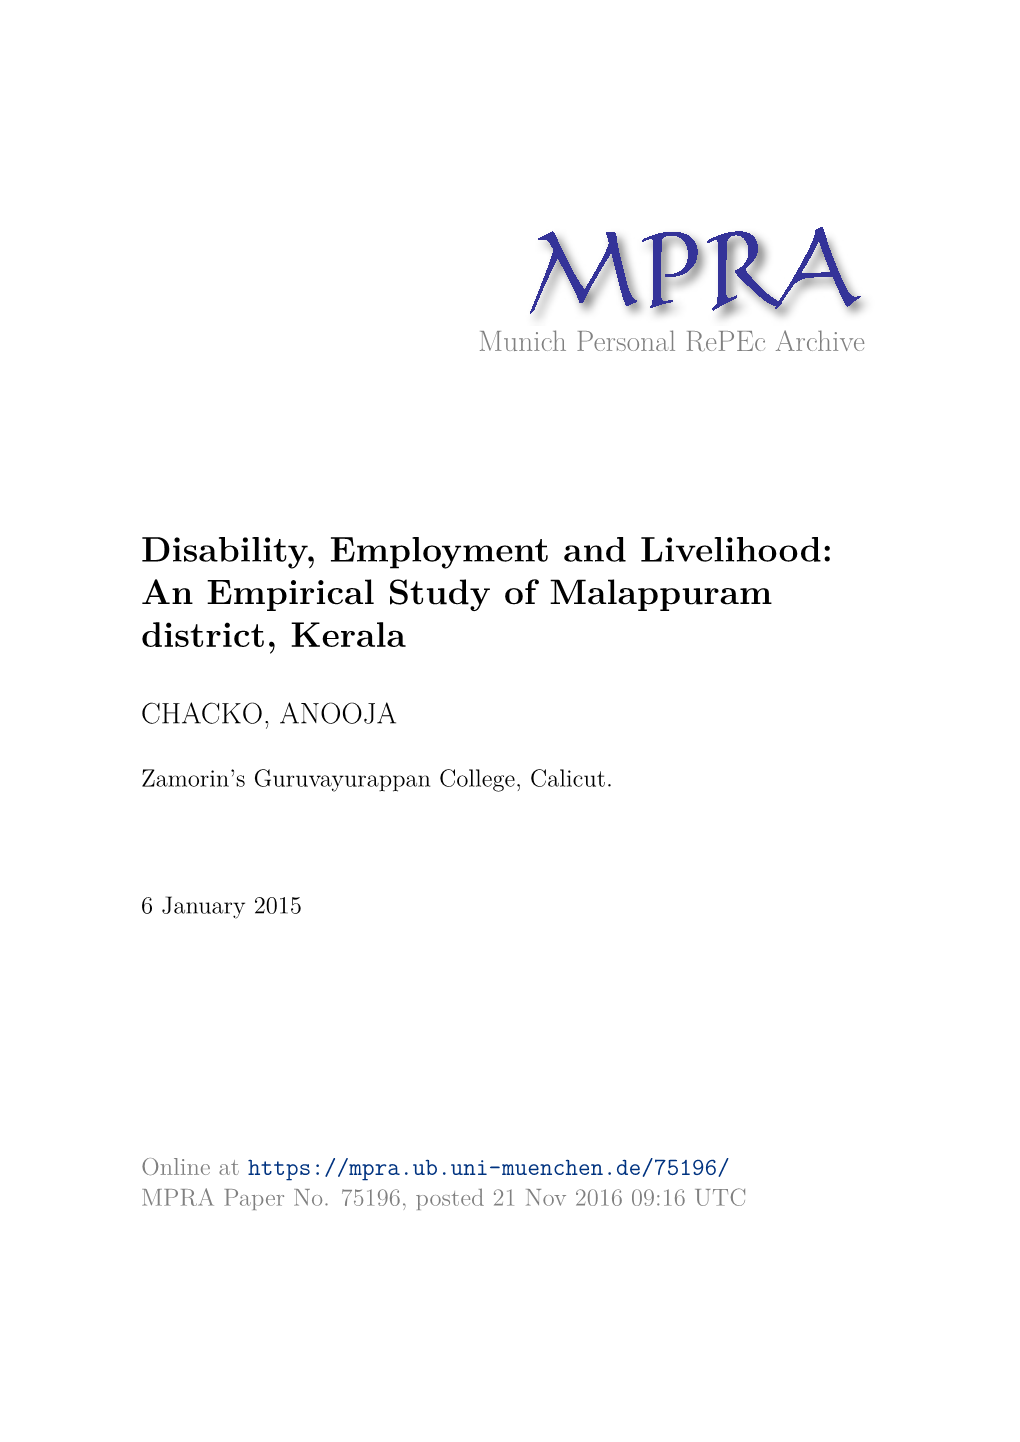 Disability, Employment and Livelihood: an Empirical Study of Malappuram District, Kerala